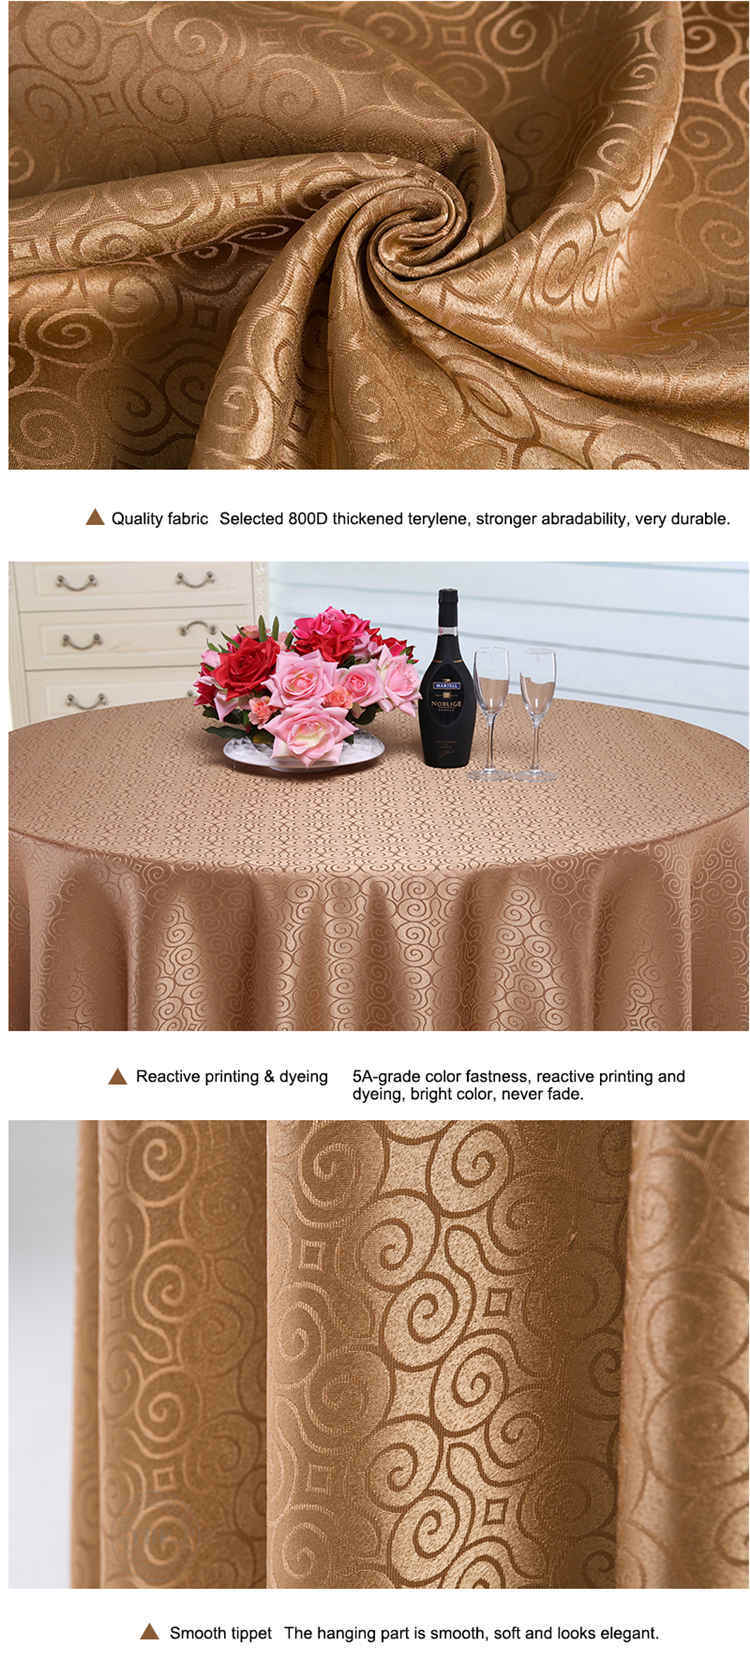 Yrf Round Tablecloths for Wedding 90 Round Tablecloths